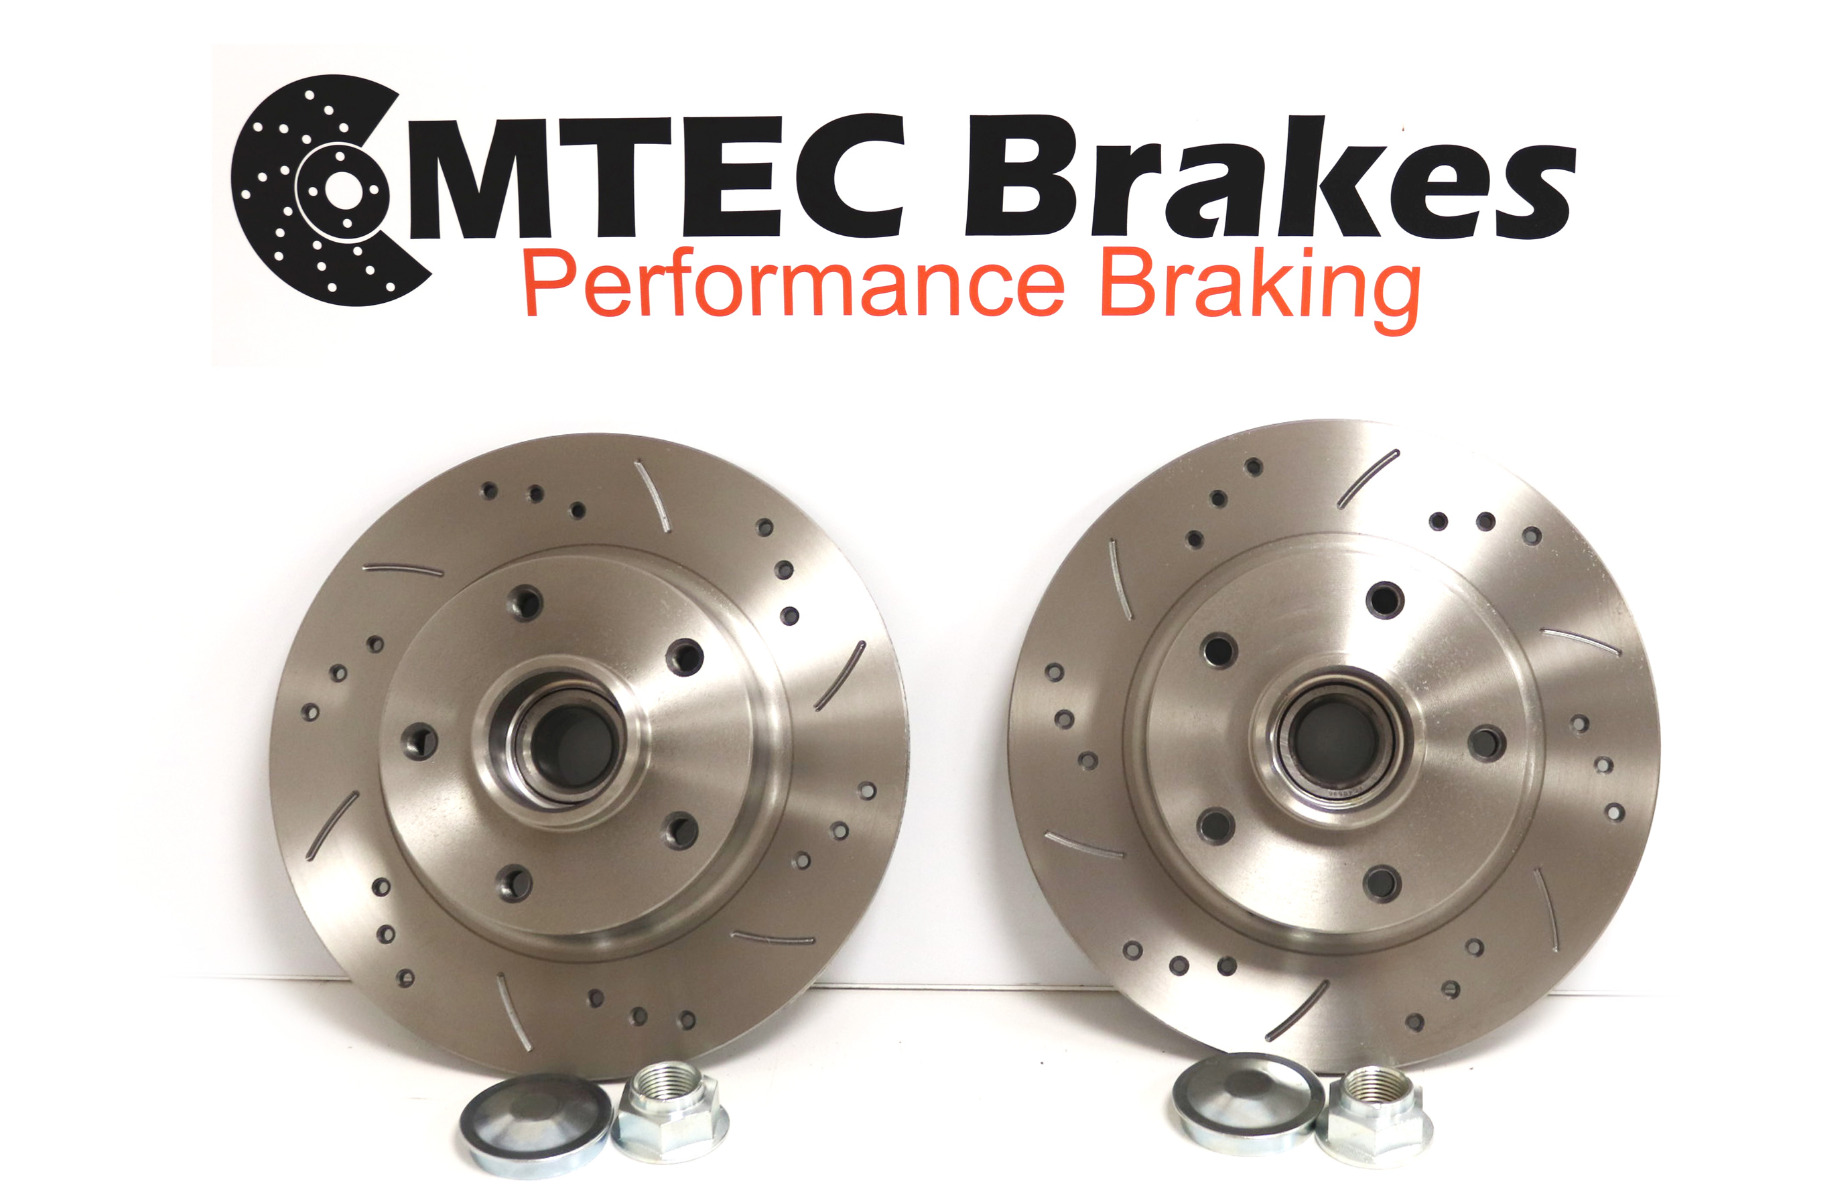 MTEC4009 Performance Brake Discs